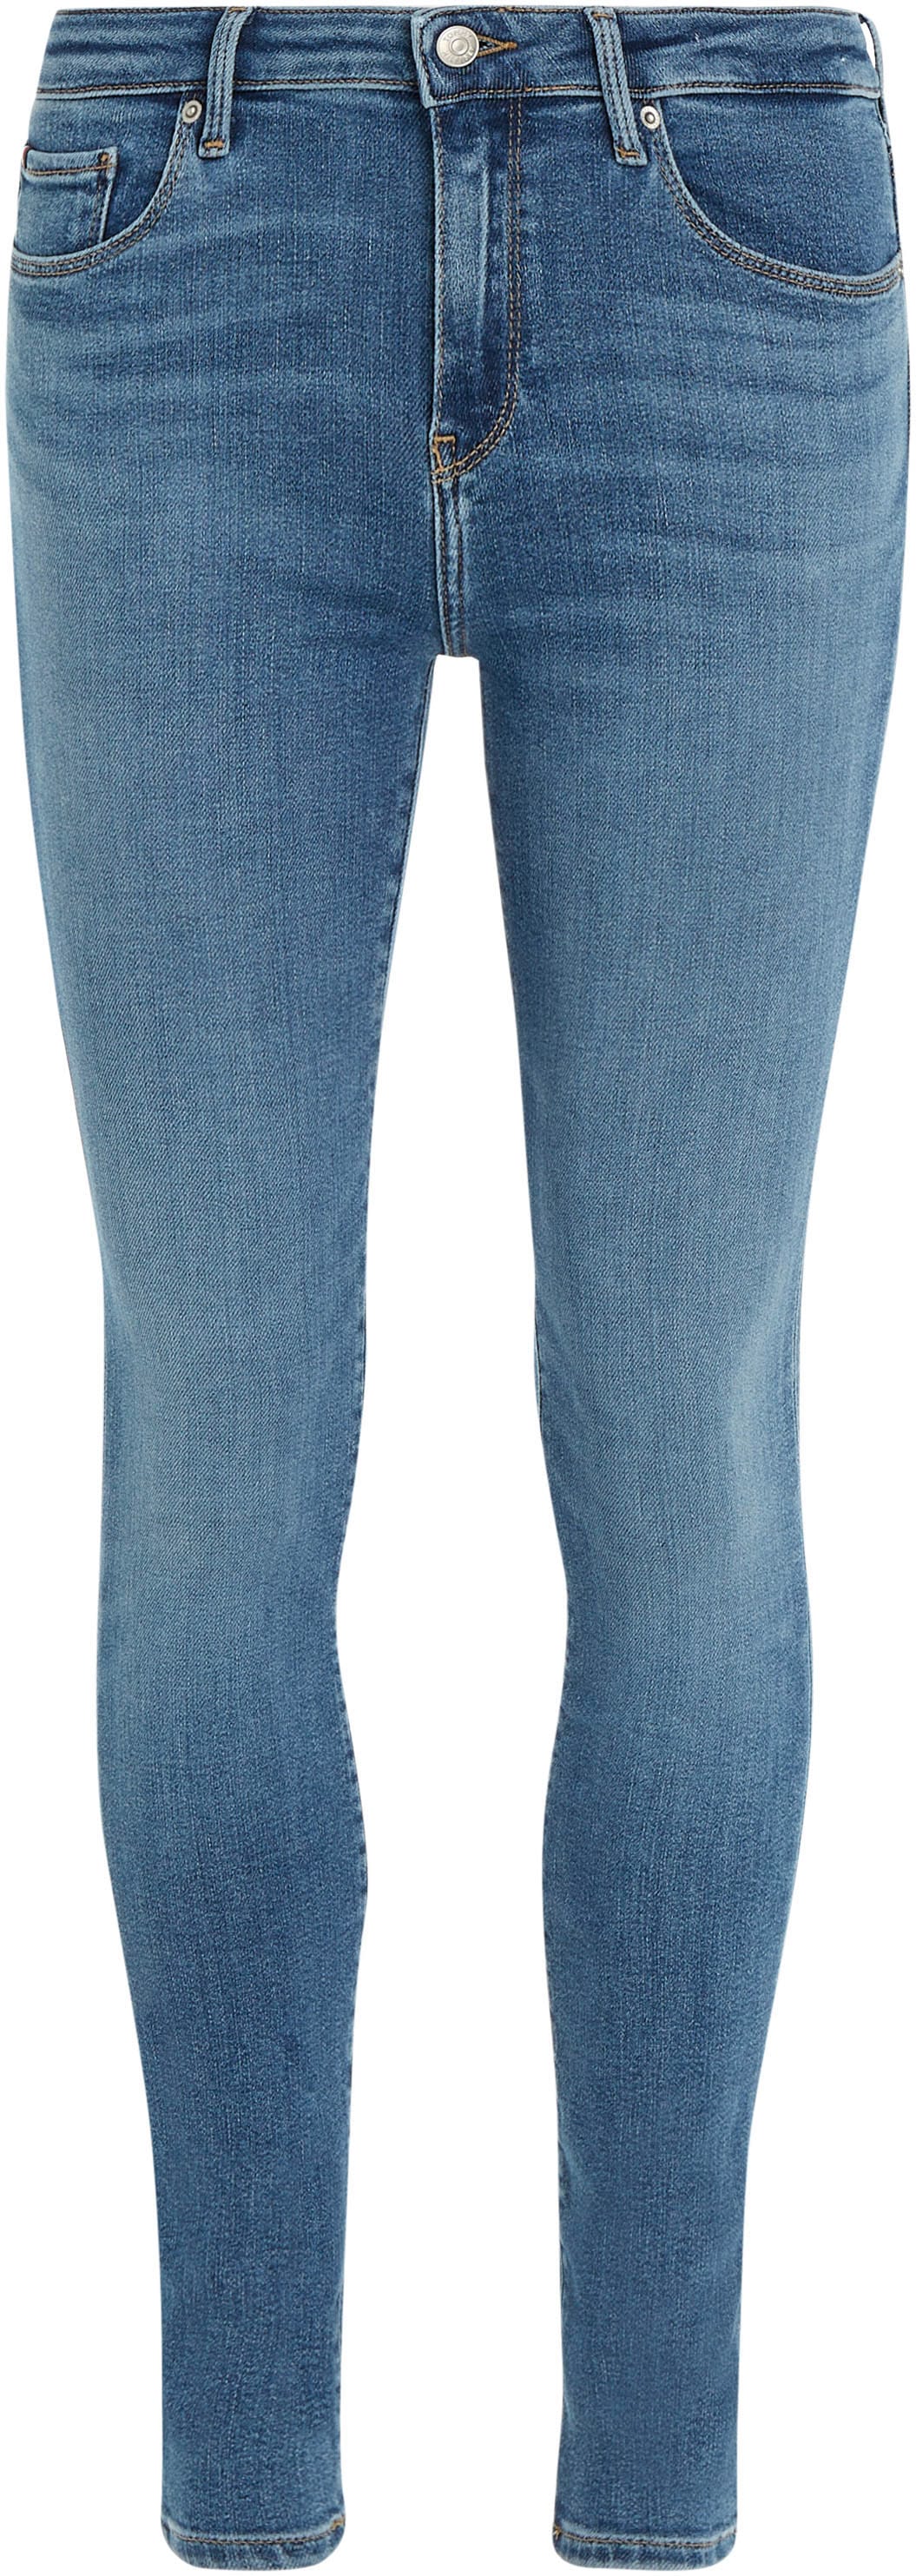 MEL«, TH mit Hilfiger HW für HARLEM »CRV Logoprägung SKNNY FLX Tommy Skinny-fit-Jeans kaufen BAUR Curve |